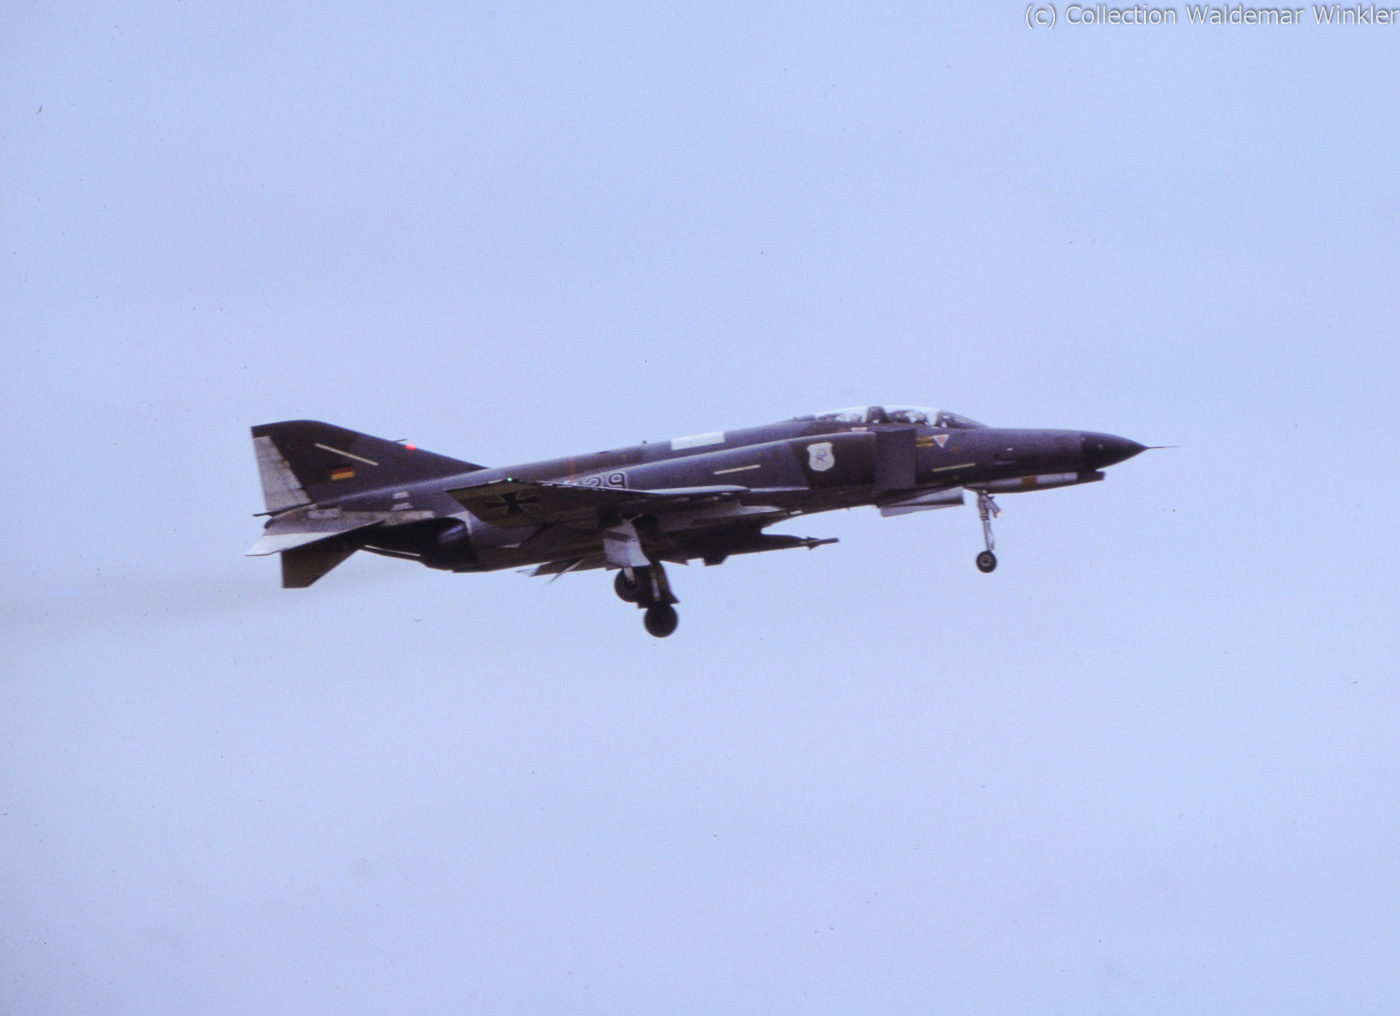 F-4_Phantom_II_DSC_1405.jpg